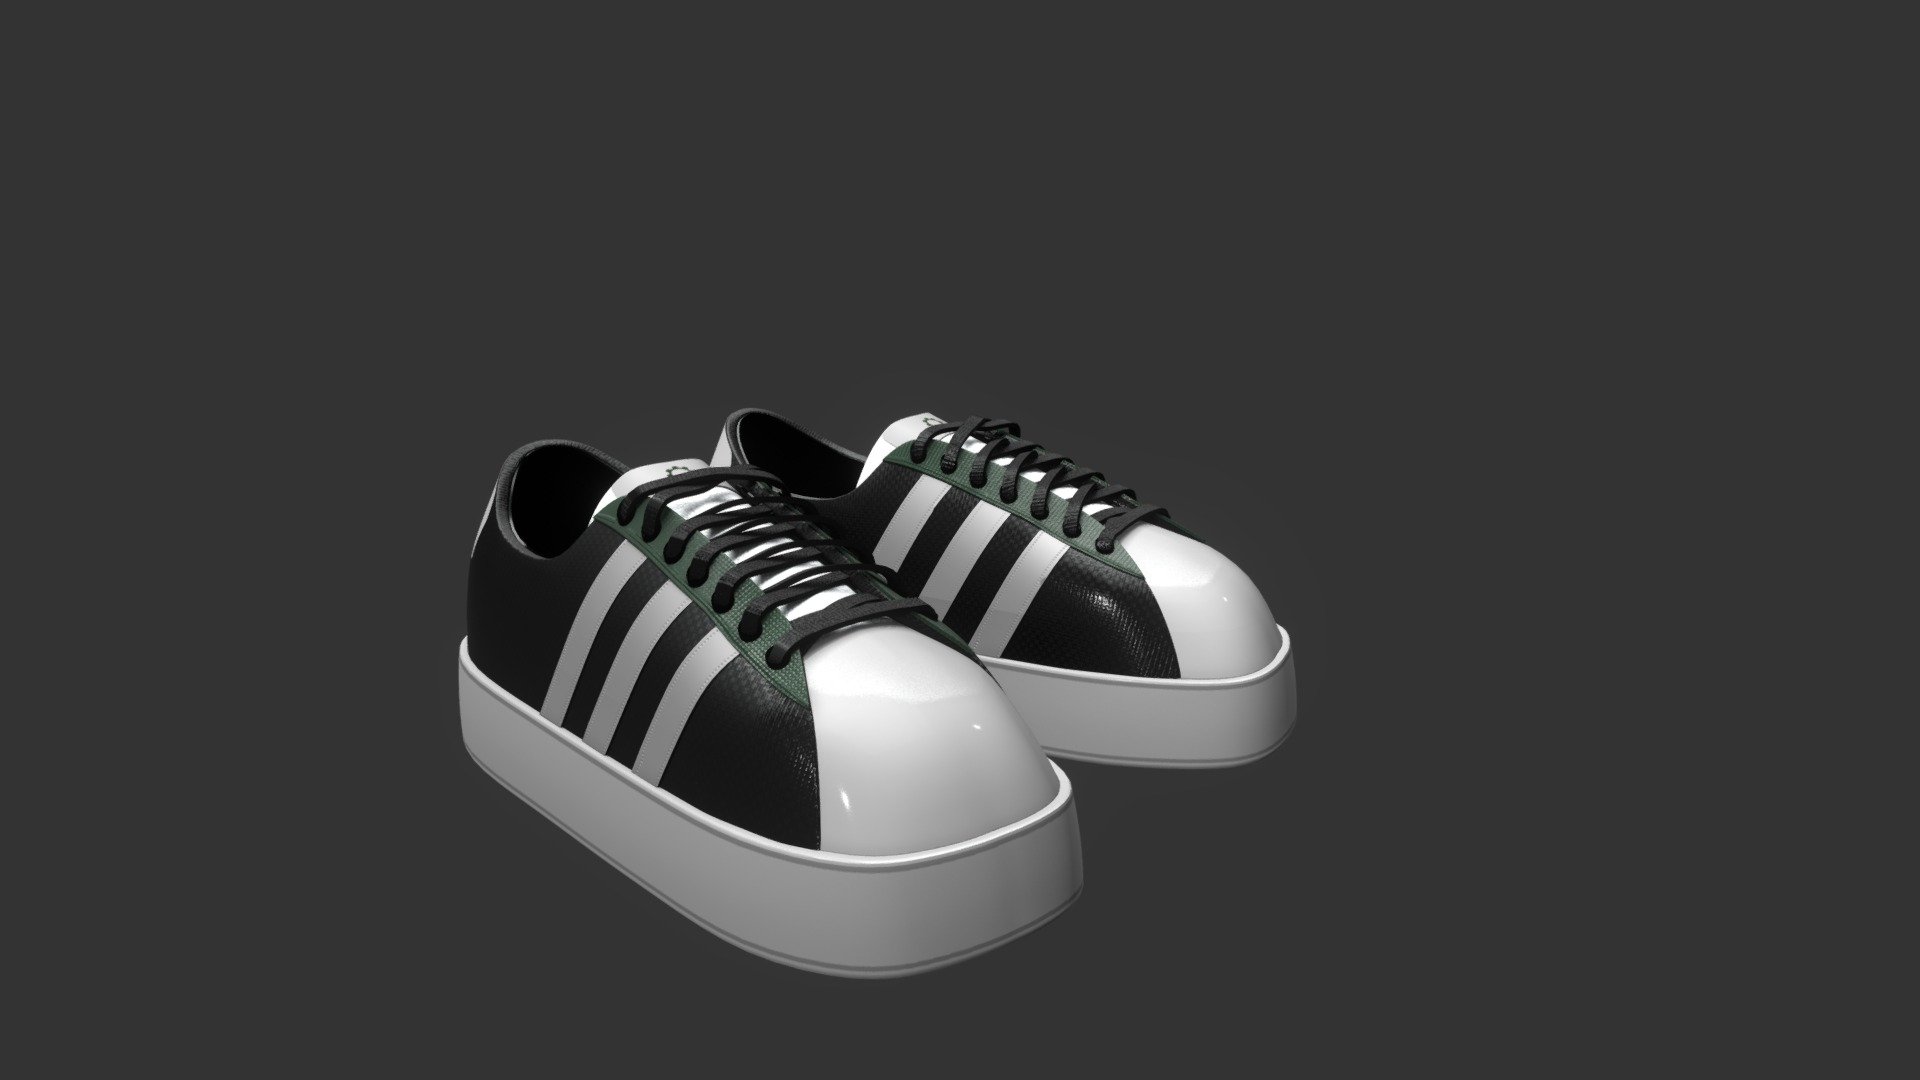 Model 3D - Shoes, works in Blender, texturing in Substance Painter 3d model